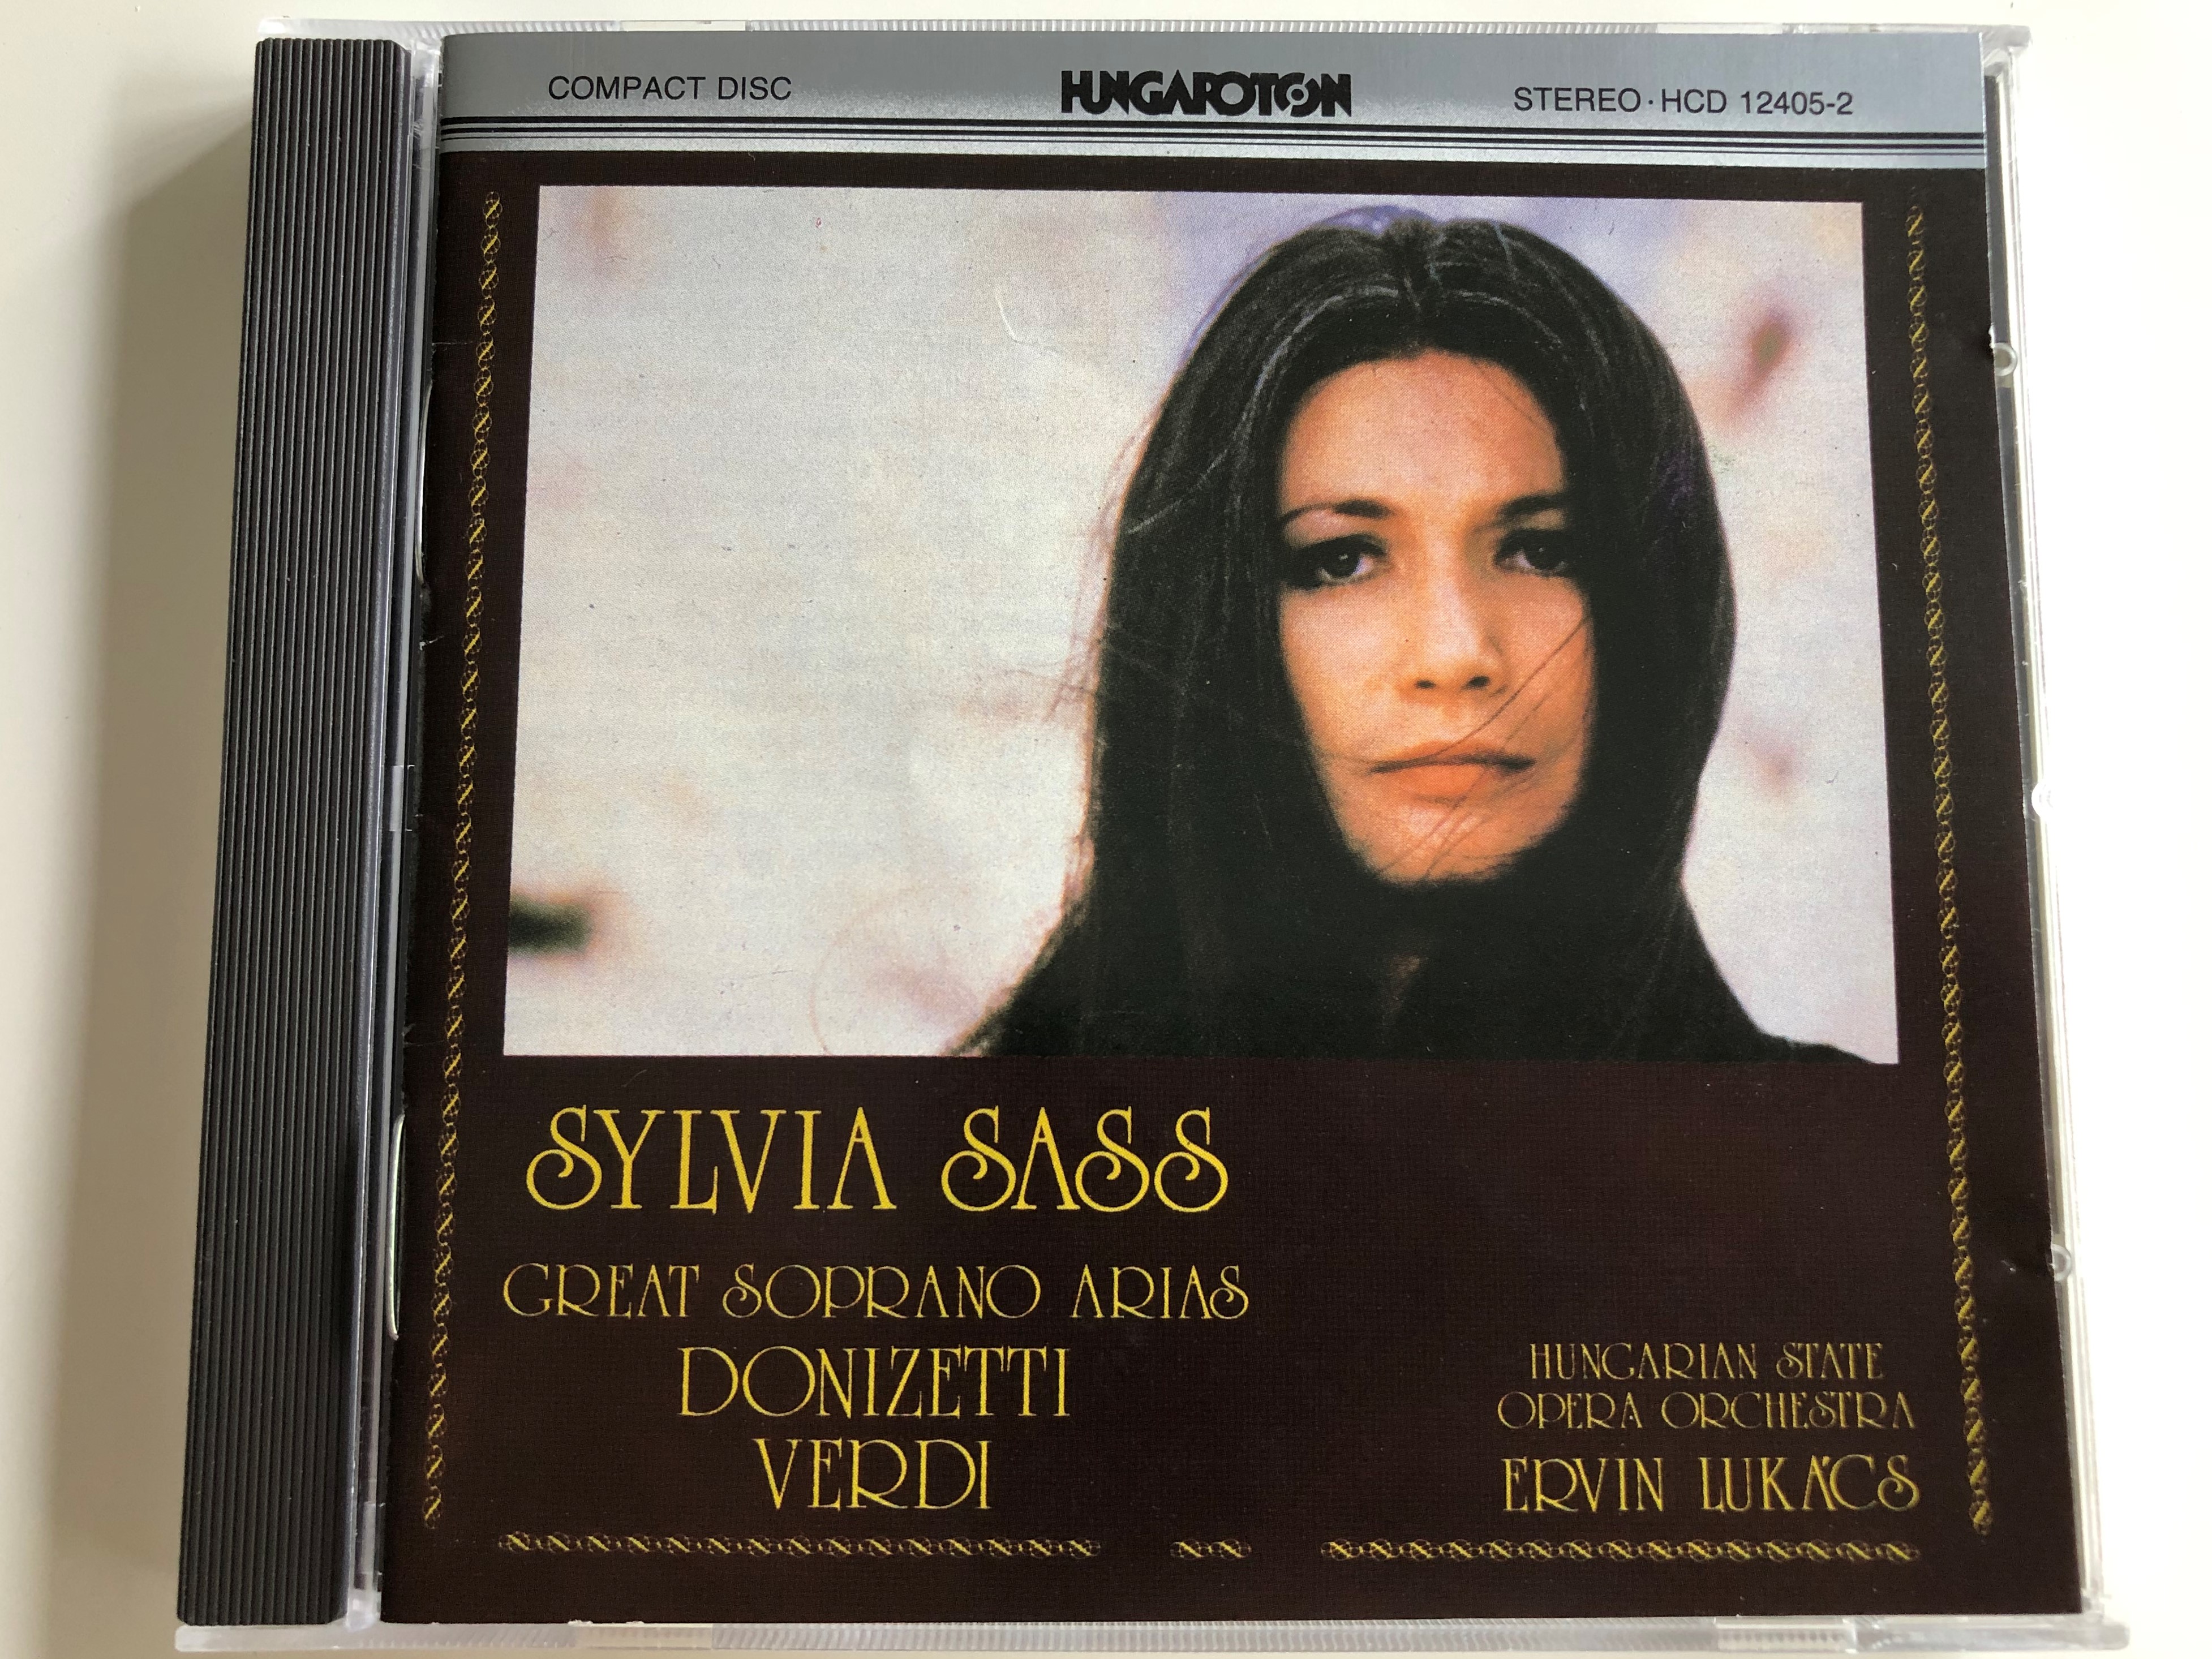 sylvia-sass-great-soprano-arias-donizetti-verdi-hungarian-state-opera-orchestra-conducted-by-ervin-luk-cs-hcd-12405-2-hungaroton-audio-cd-1-.jpg